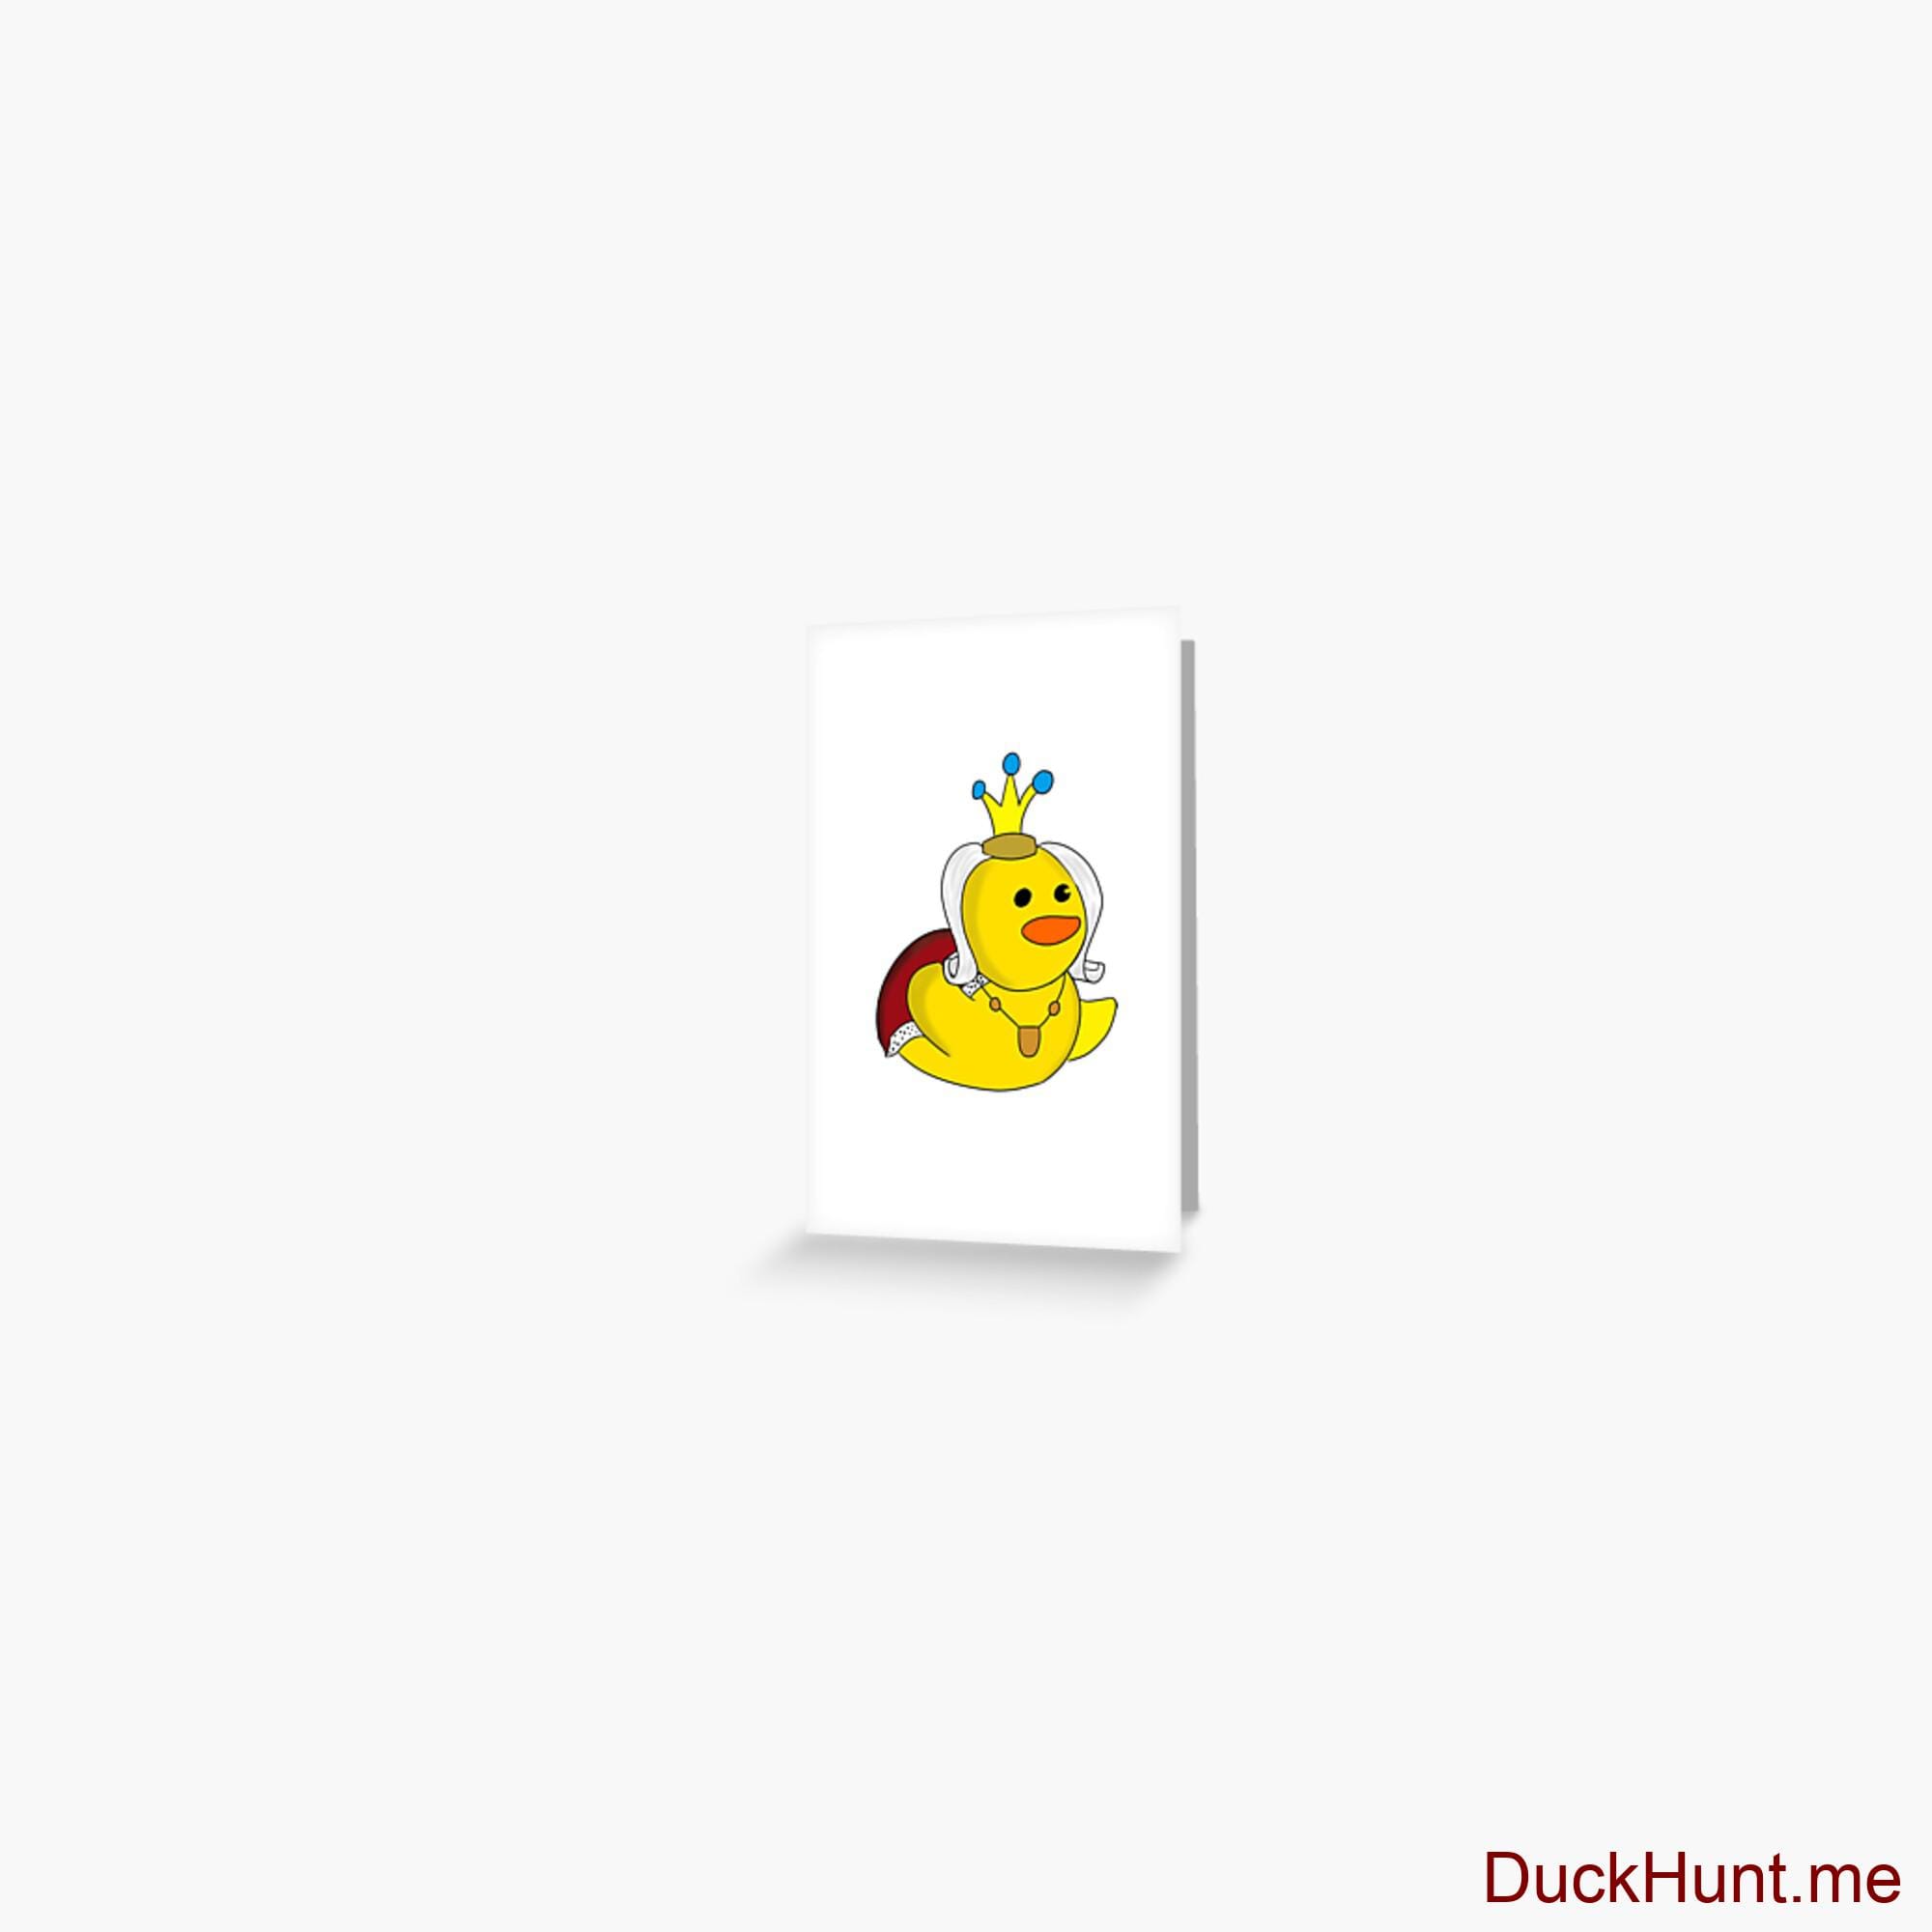 Royal Duck Greeting Card